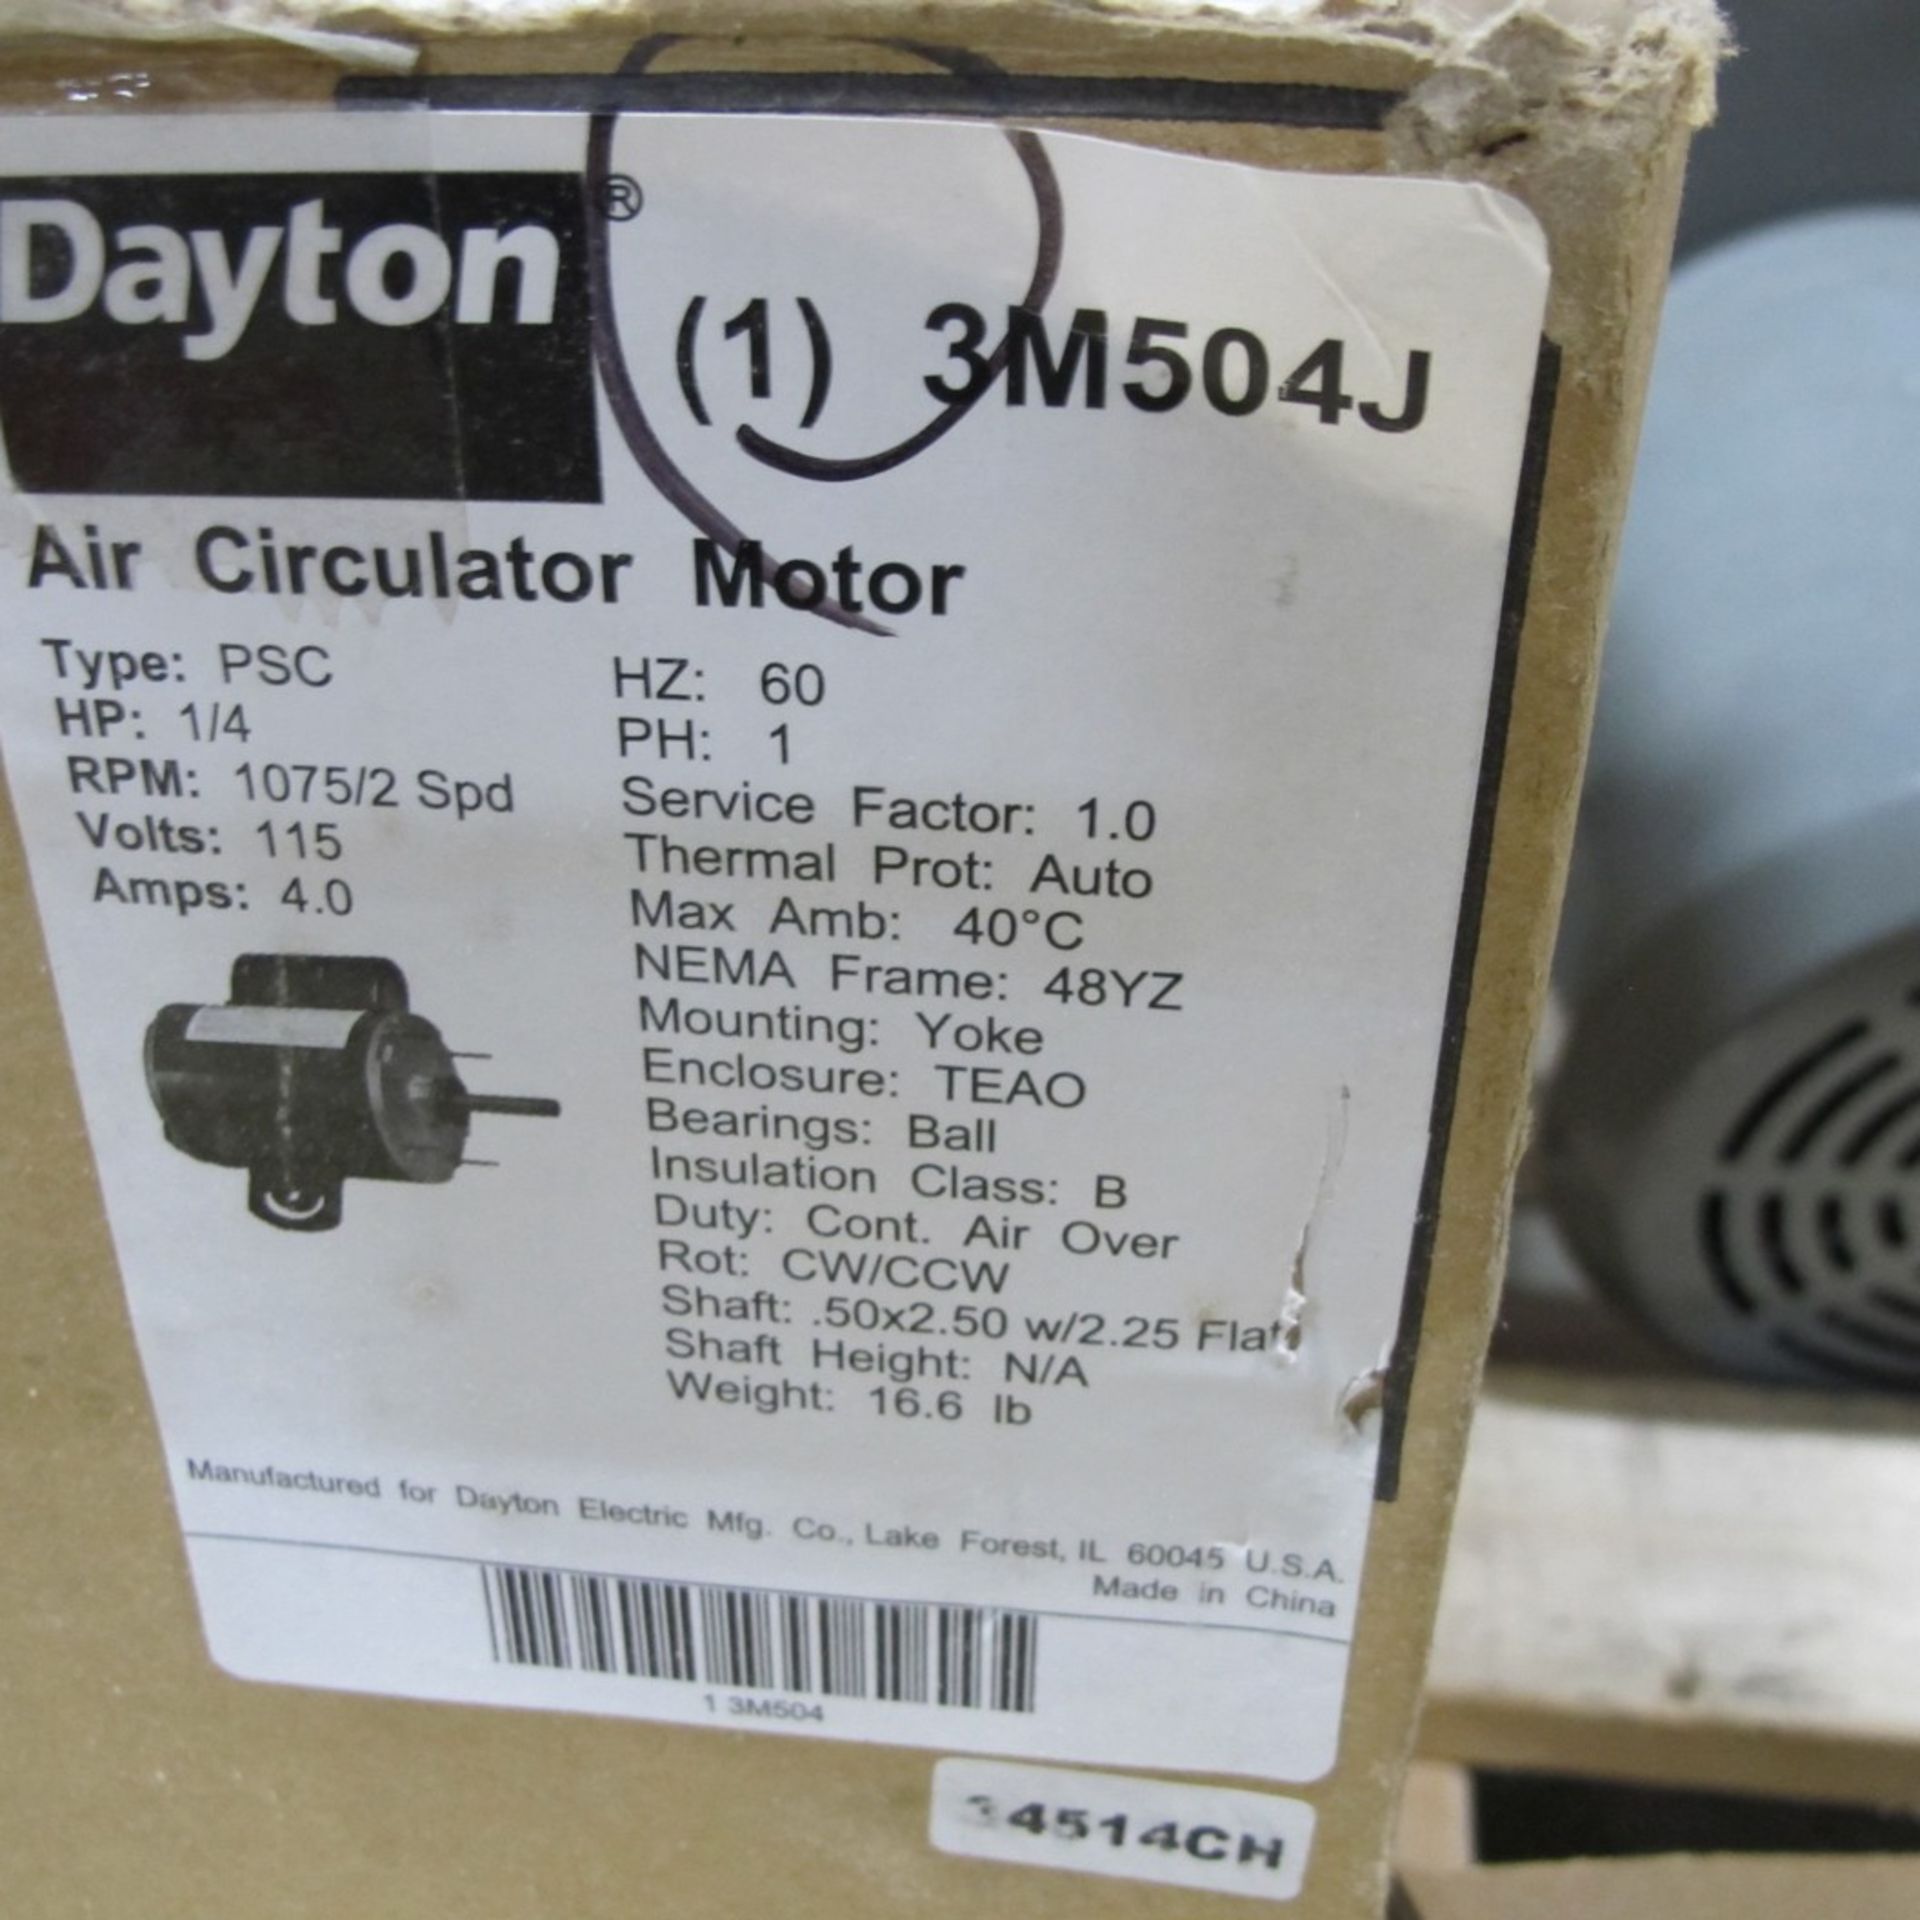 DAYTON AIR CIRCULATOR MOTOR, 1/4HP, 115V, 1,075/2 RPM, 48YZ FRAME (NORTHWEST PLANT) - Image 2 of 3